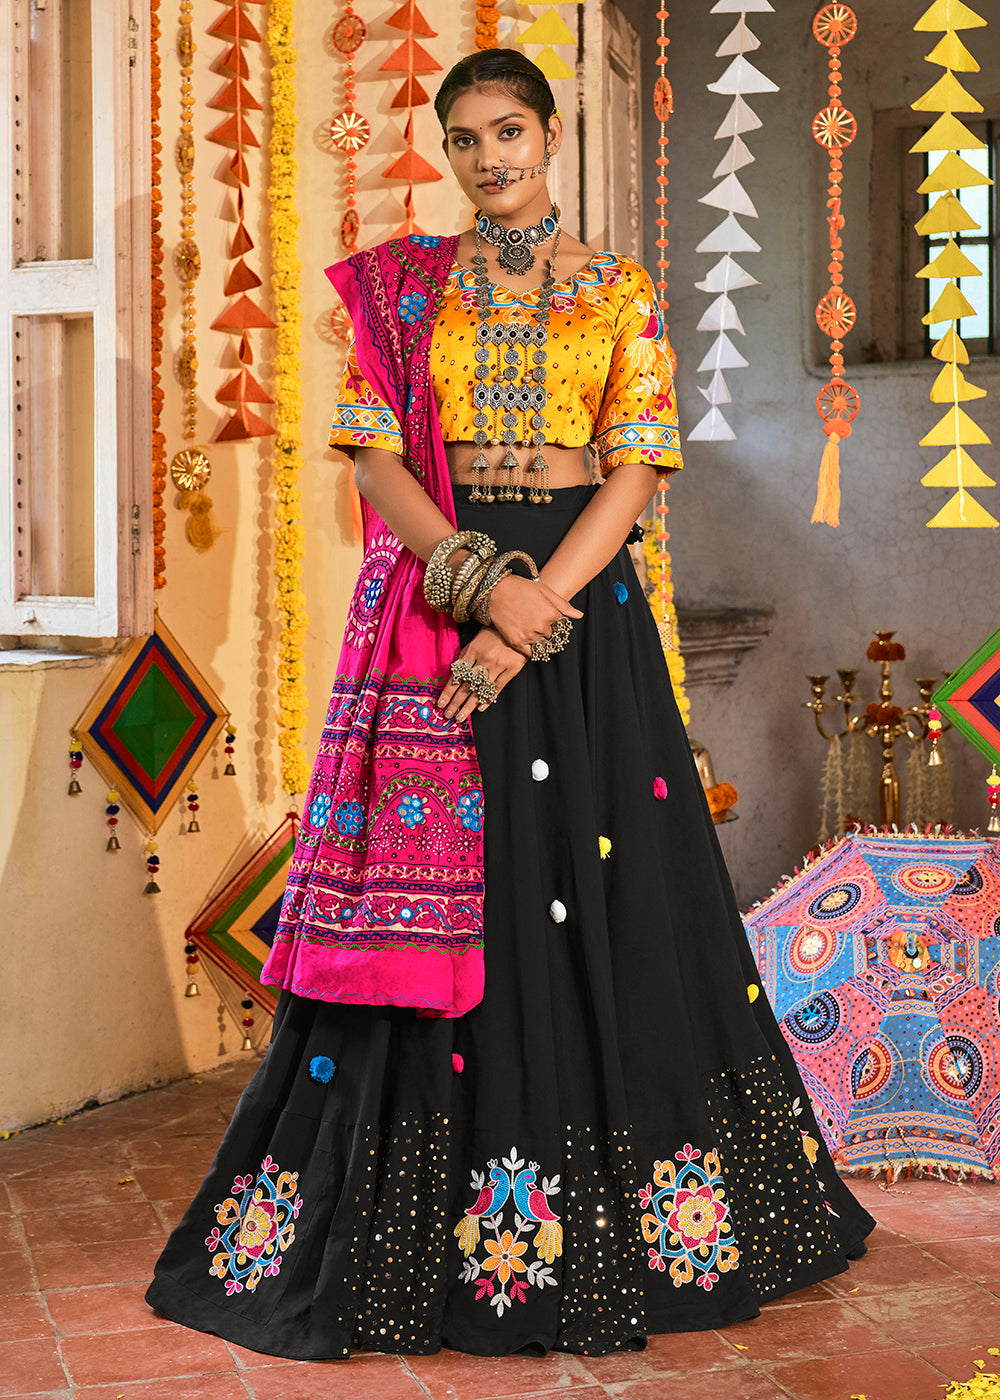 Buy Now Marvelous Black Maslin Cotton Navratri Chaniya Choli Online in USA, UK, Canada & Worldwide at Empress Clothing.